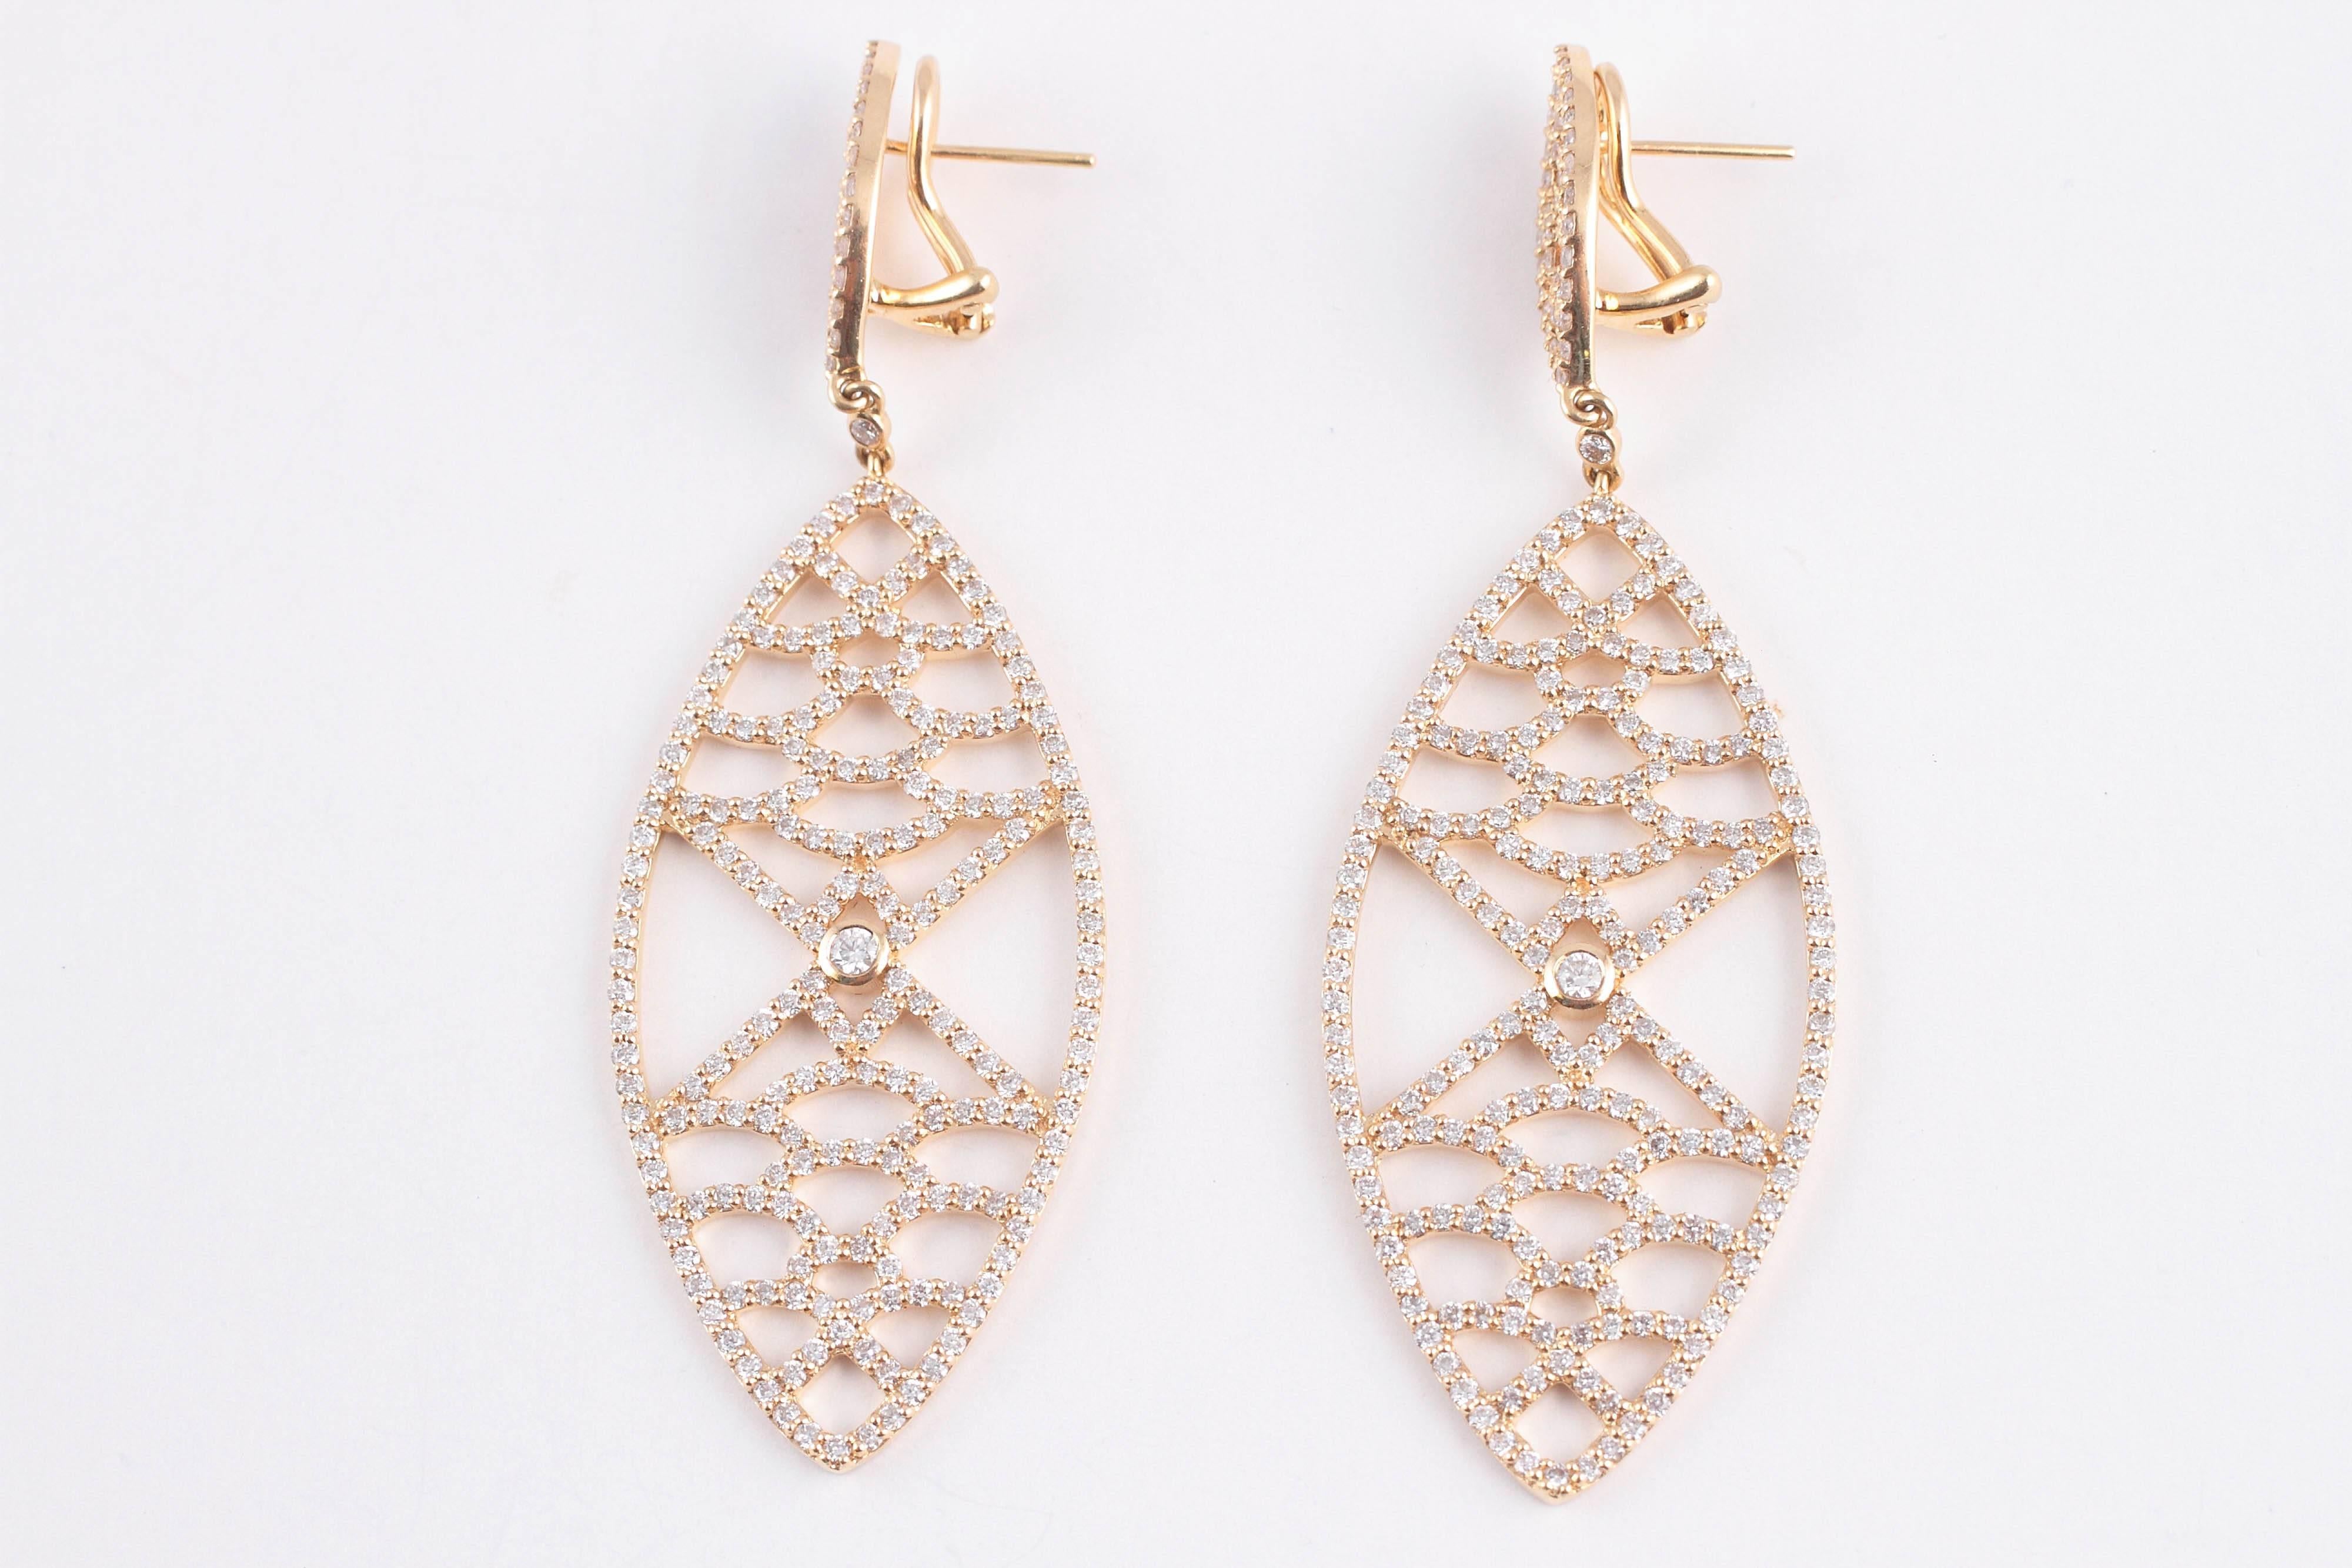 Breathtaking dangle diamond earrings by Deborah Pagani from the 